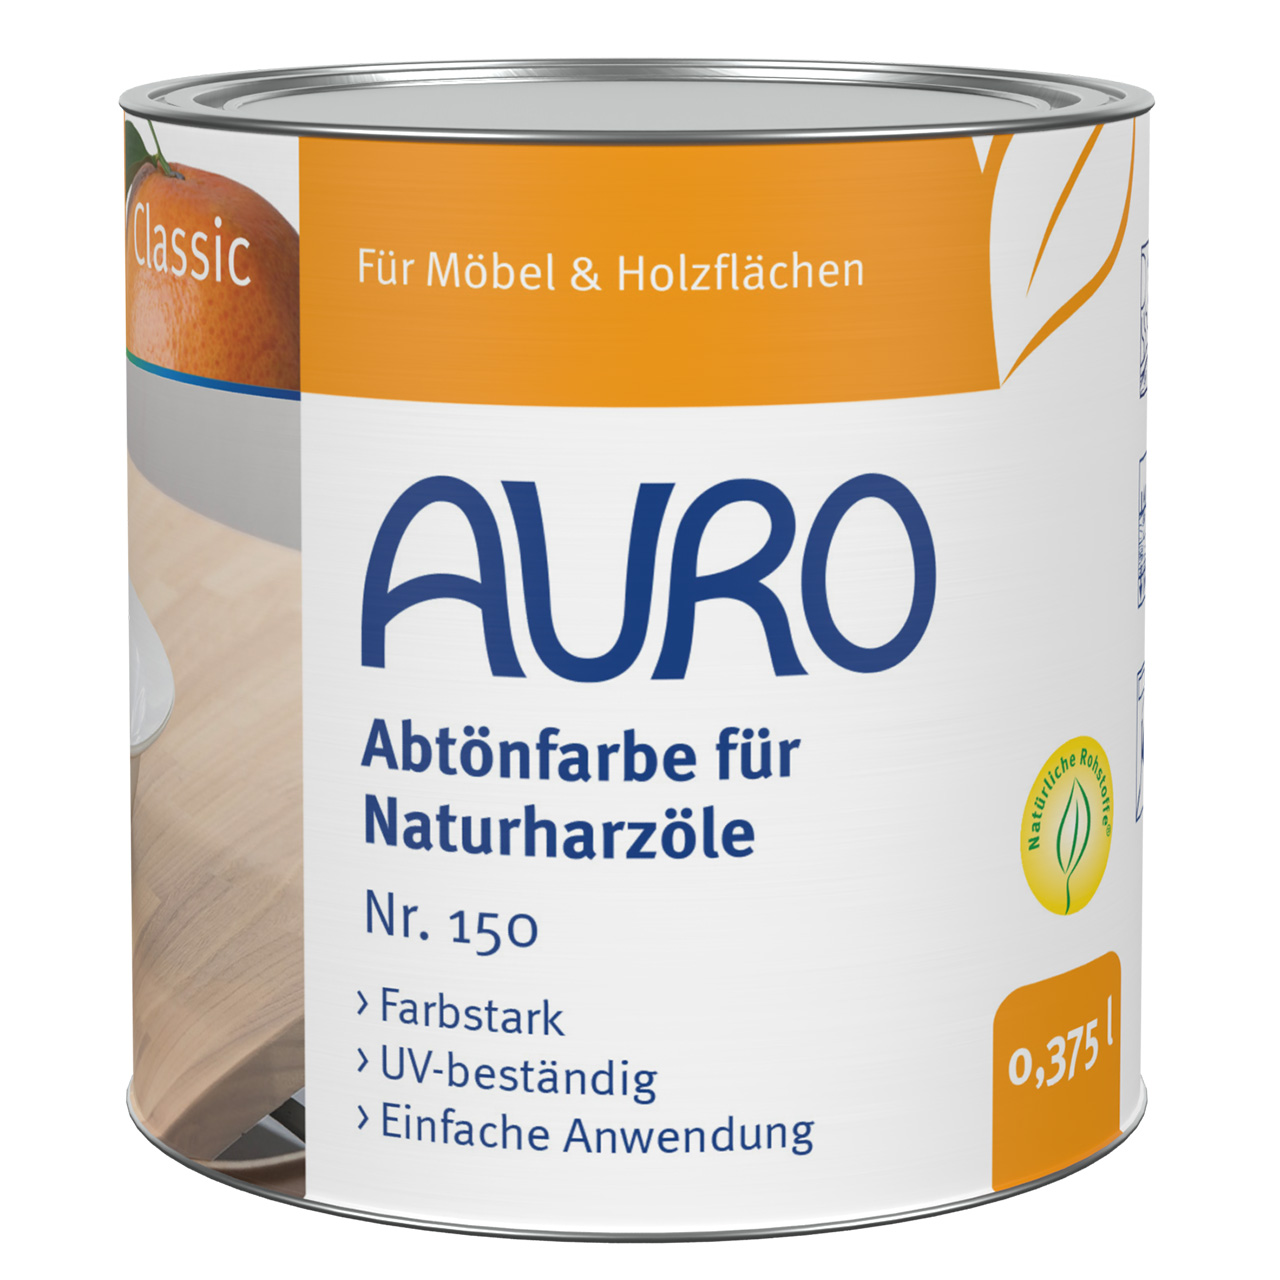 AURO Abtönfarbe für Naturharzöle Nr. 150